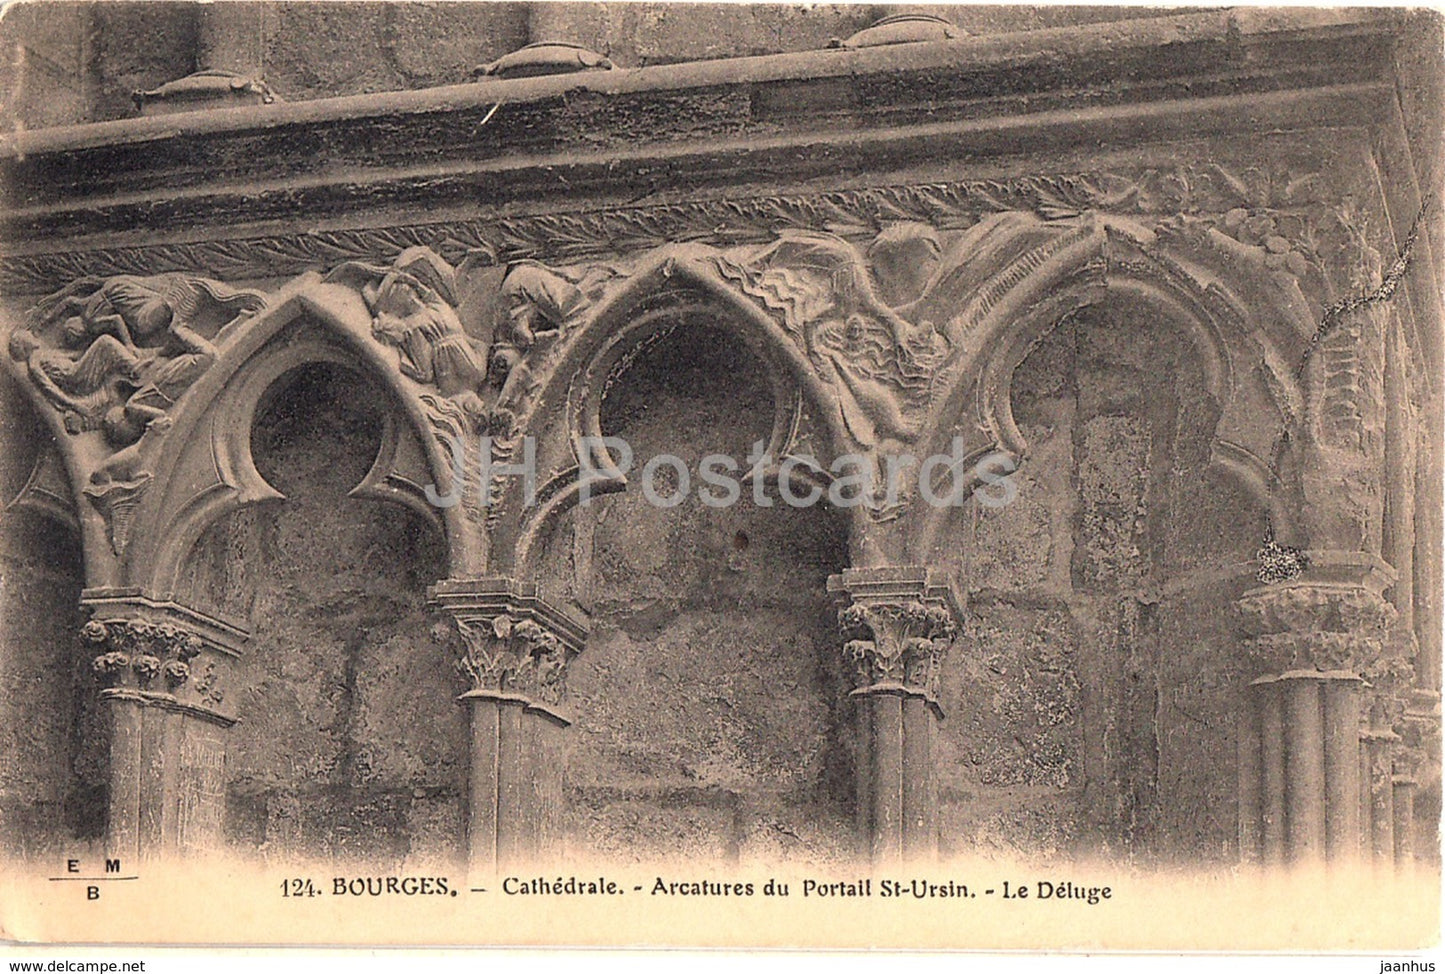 Bourges - Cathedrale - Arcatures du Portail St Ursin - Le Deluge - cathedral - 124 - old postcard - France - unused